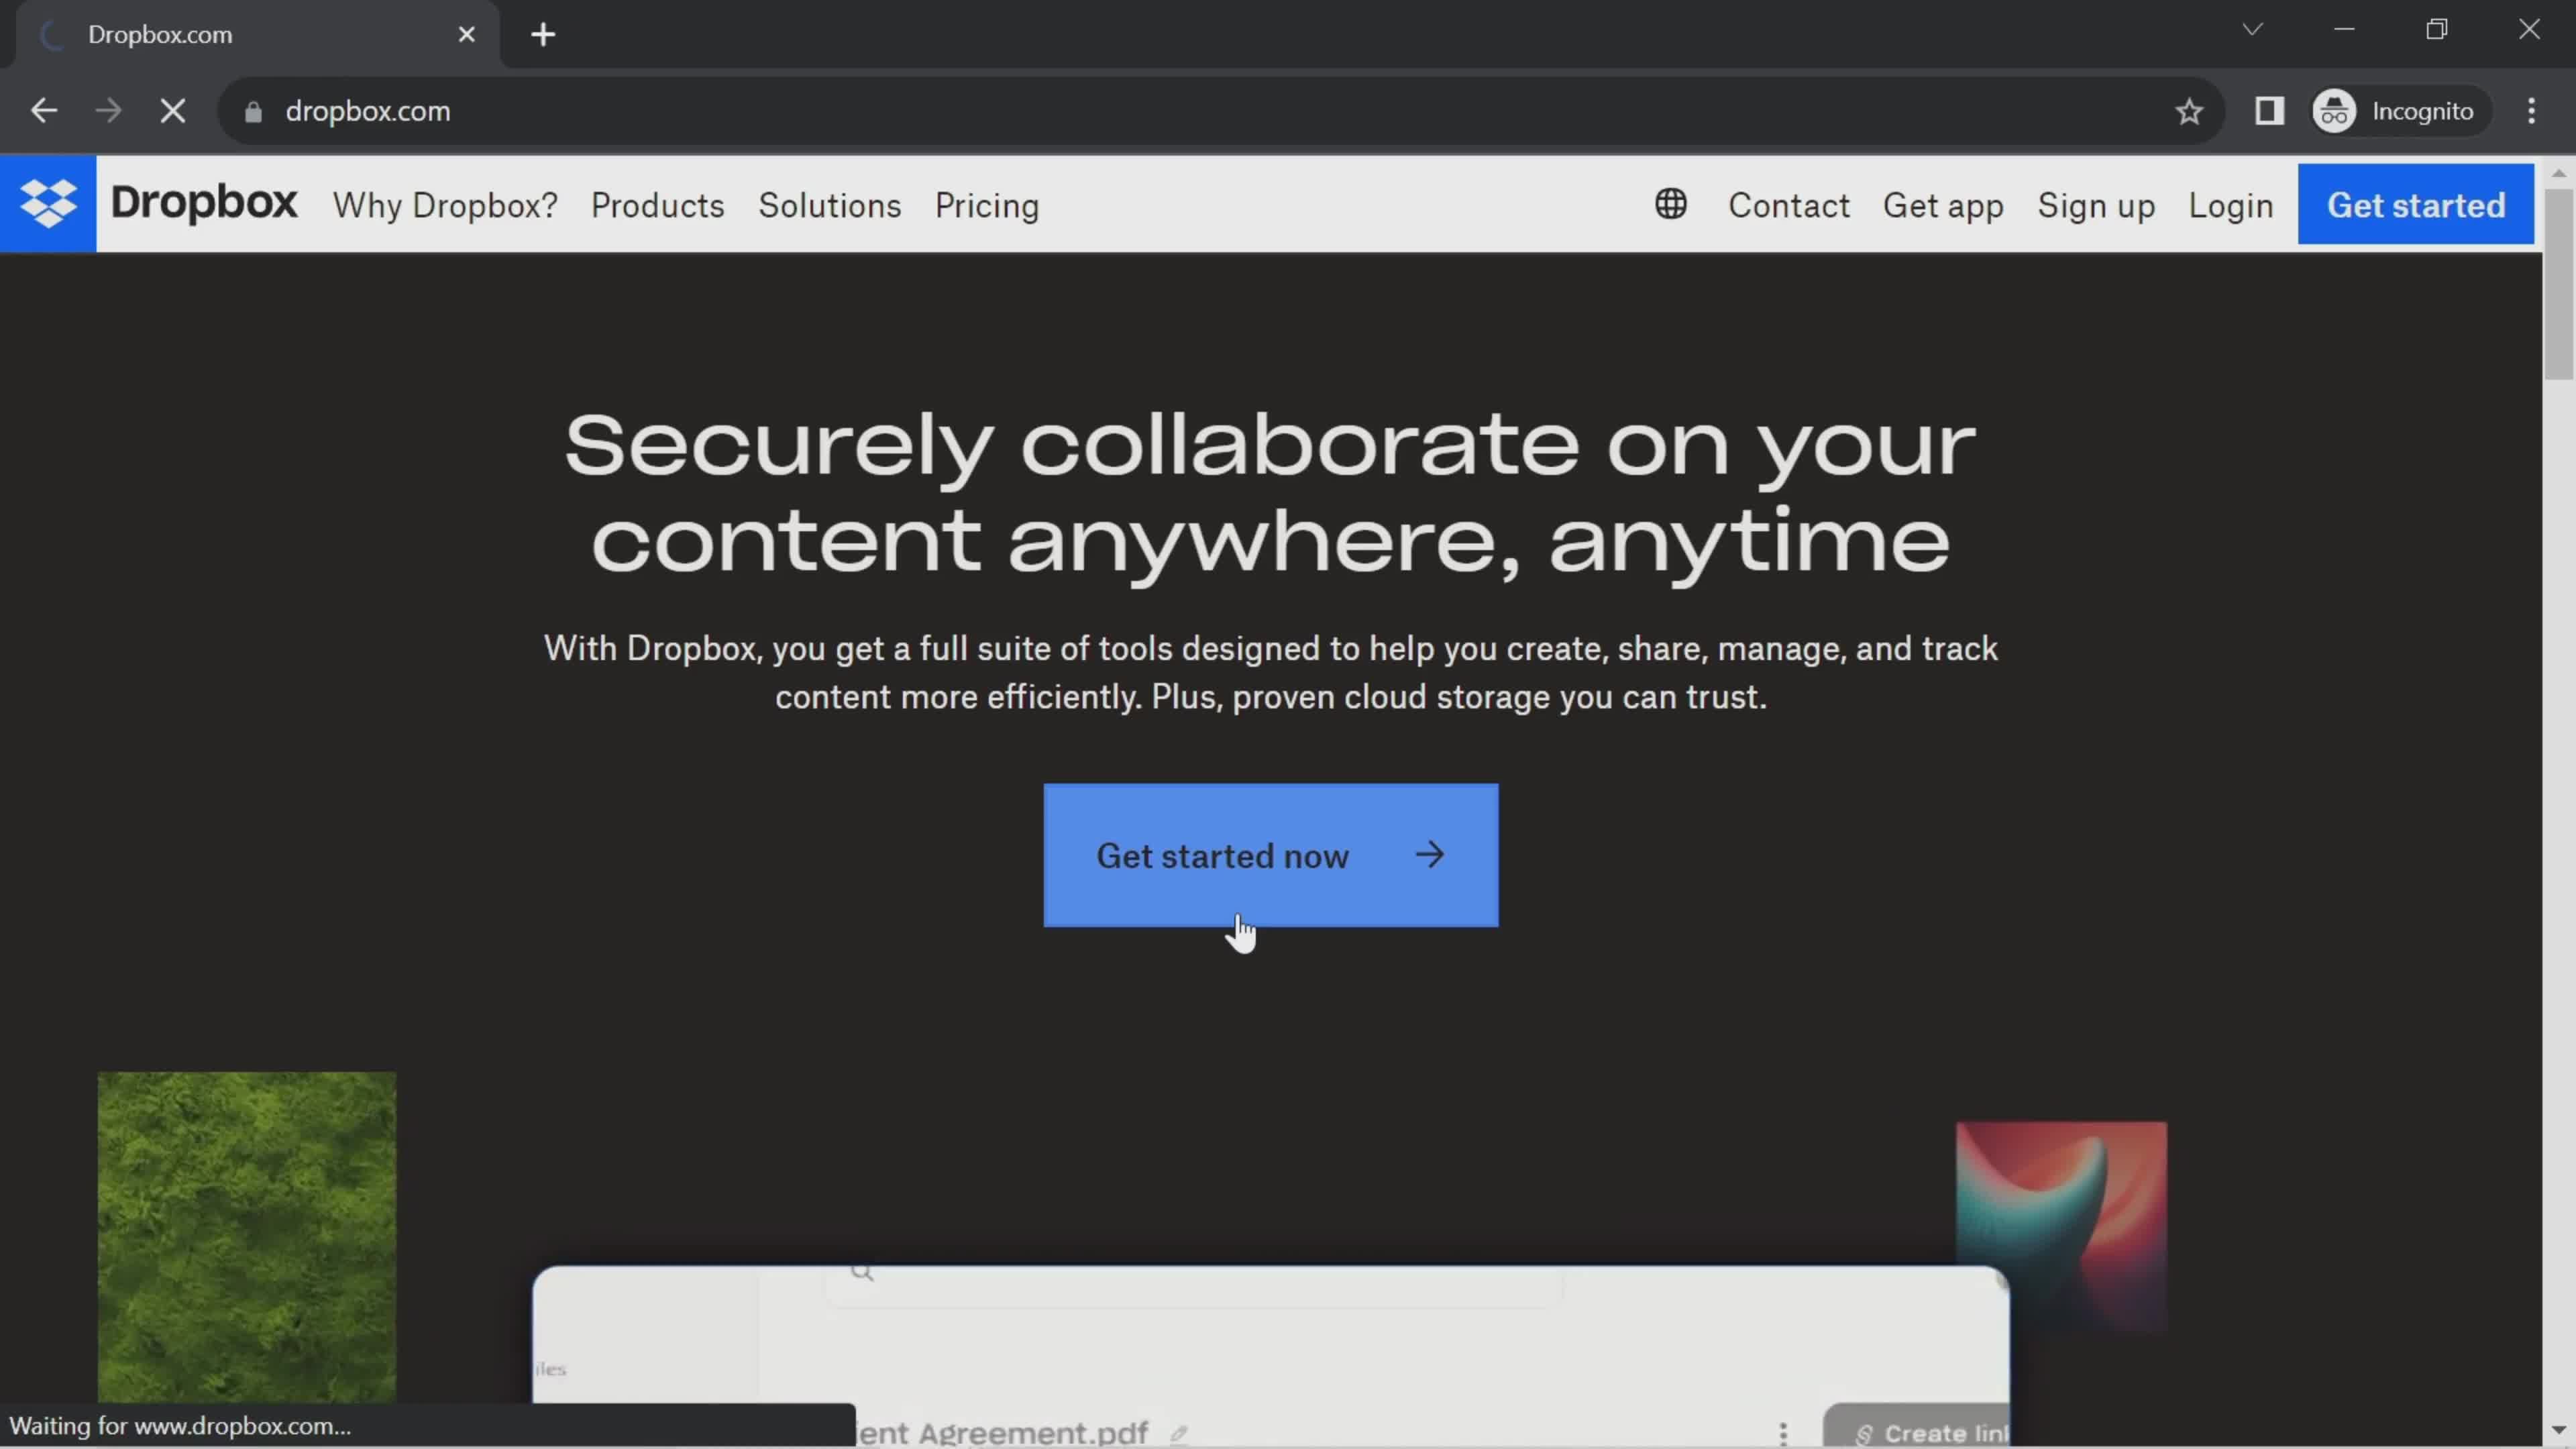 Dropbox homepage screenshot